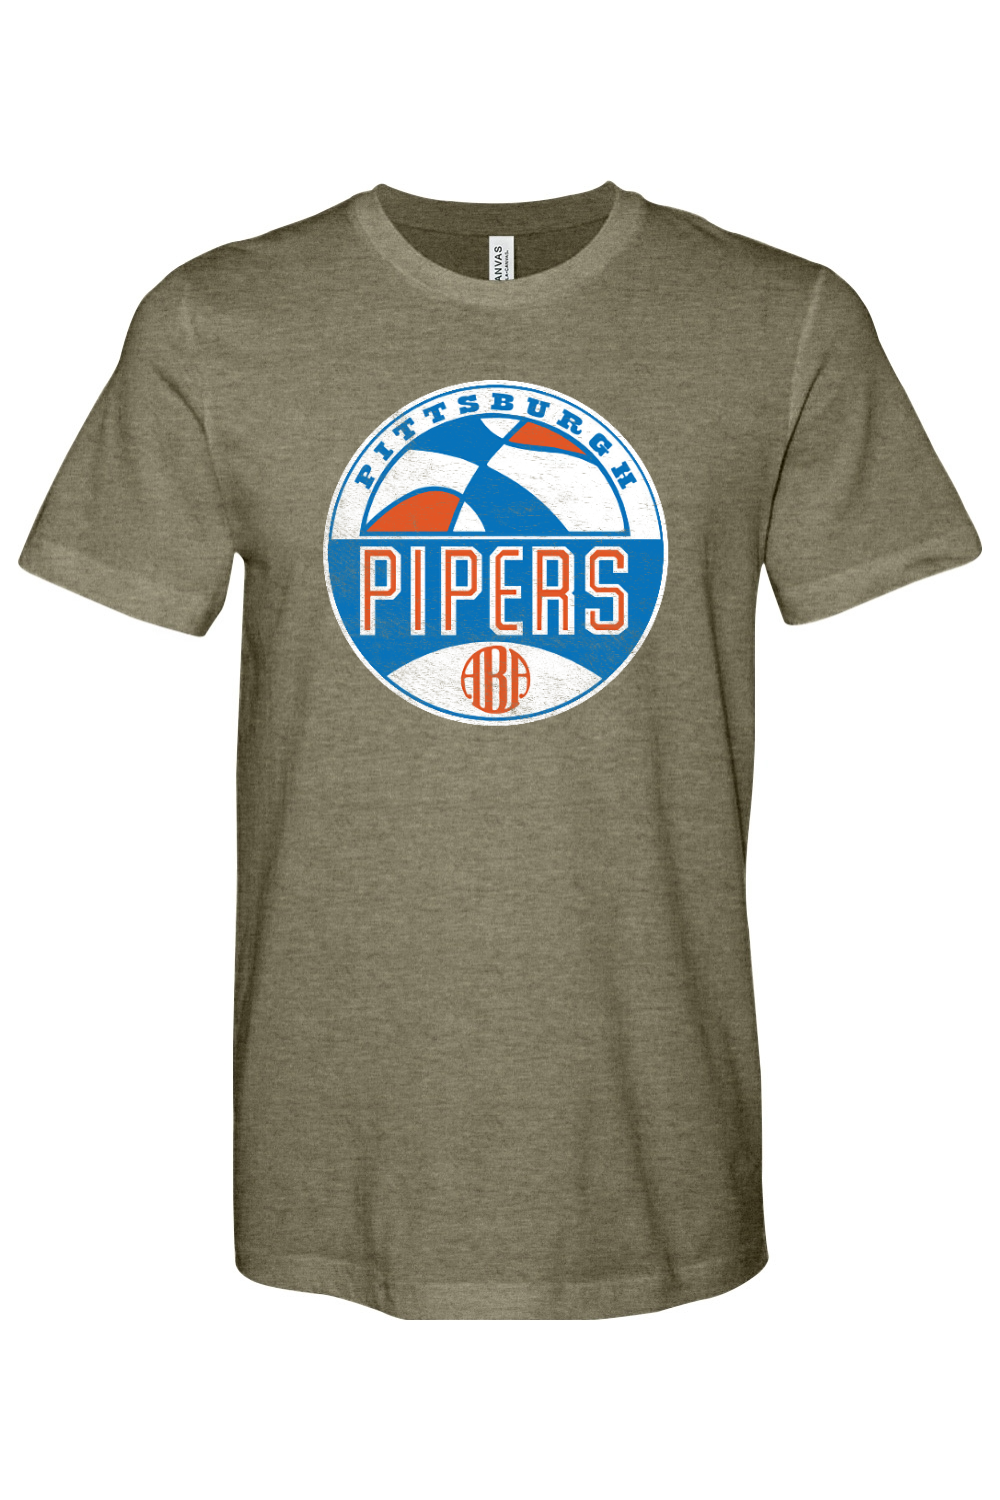 Pittsburgh Pipers Basketball (ABA) - Yinzylvania